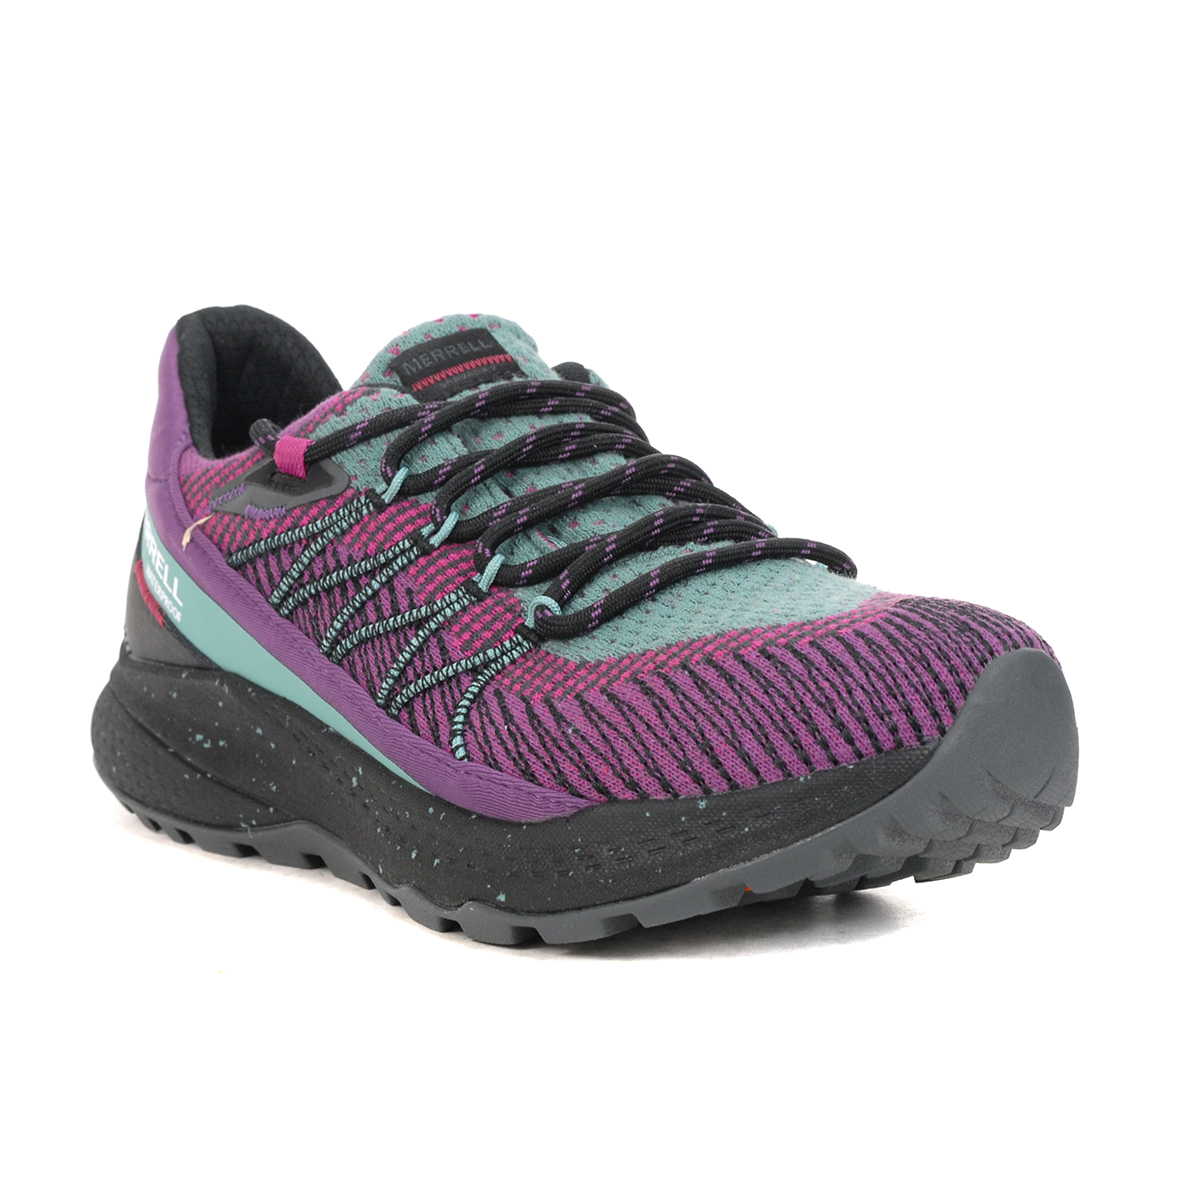 Merrell Women's Bravada 2 Mineral/Fuschia WP Trail Running Shoes